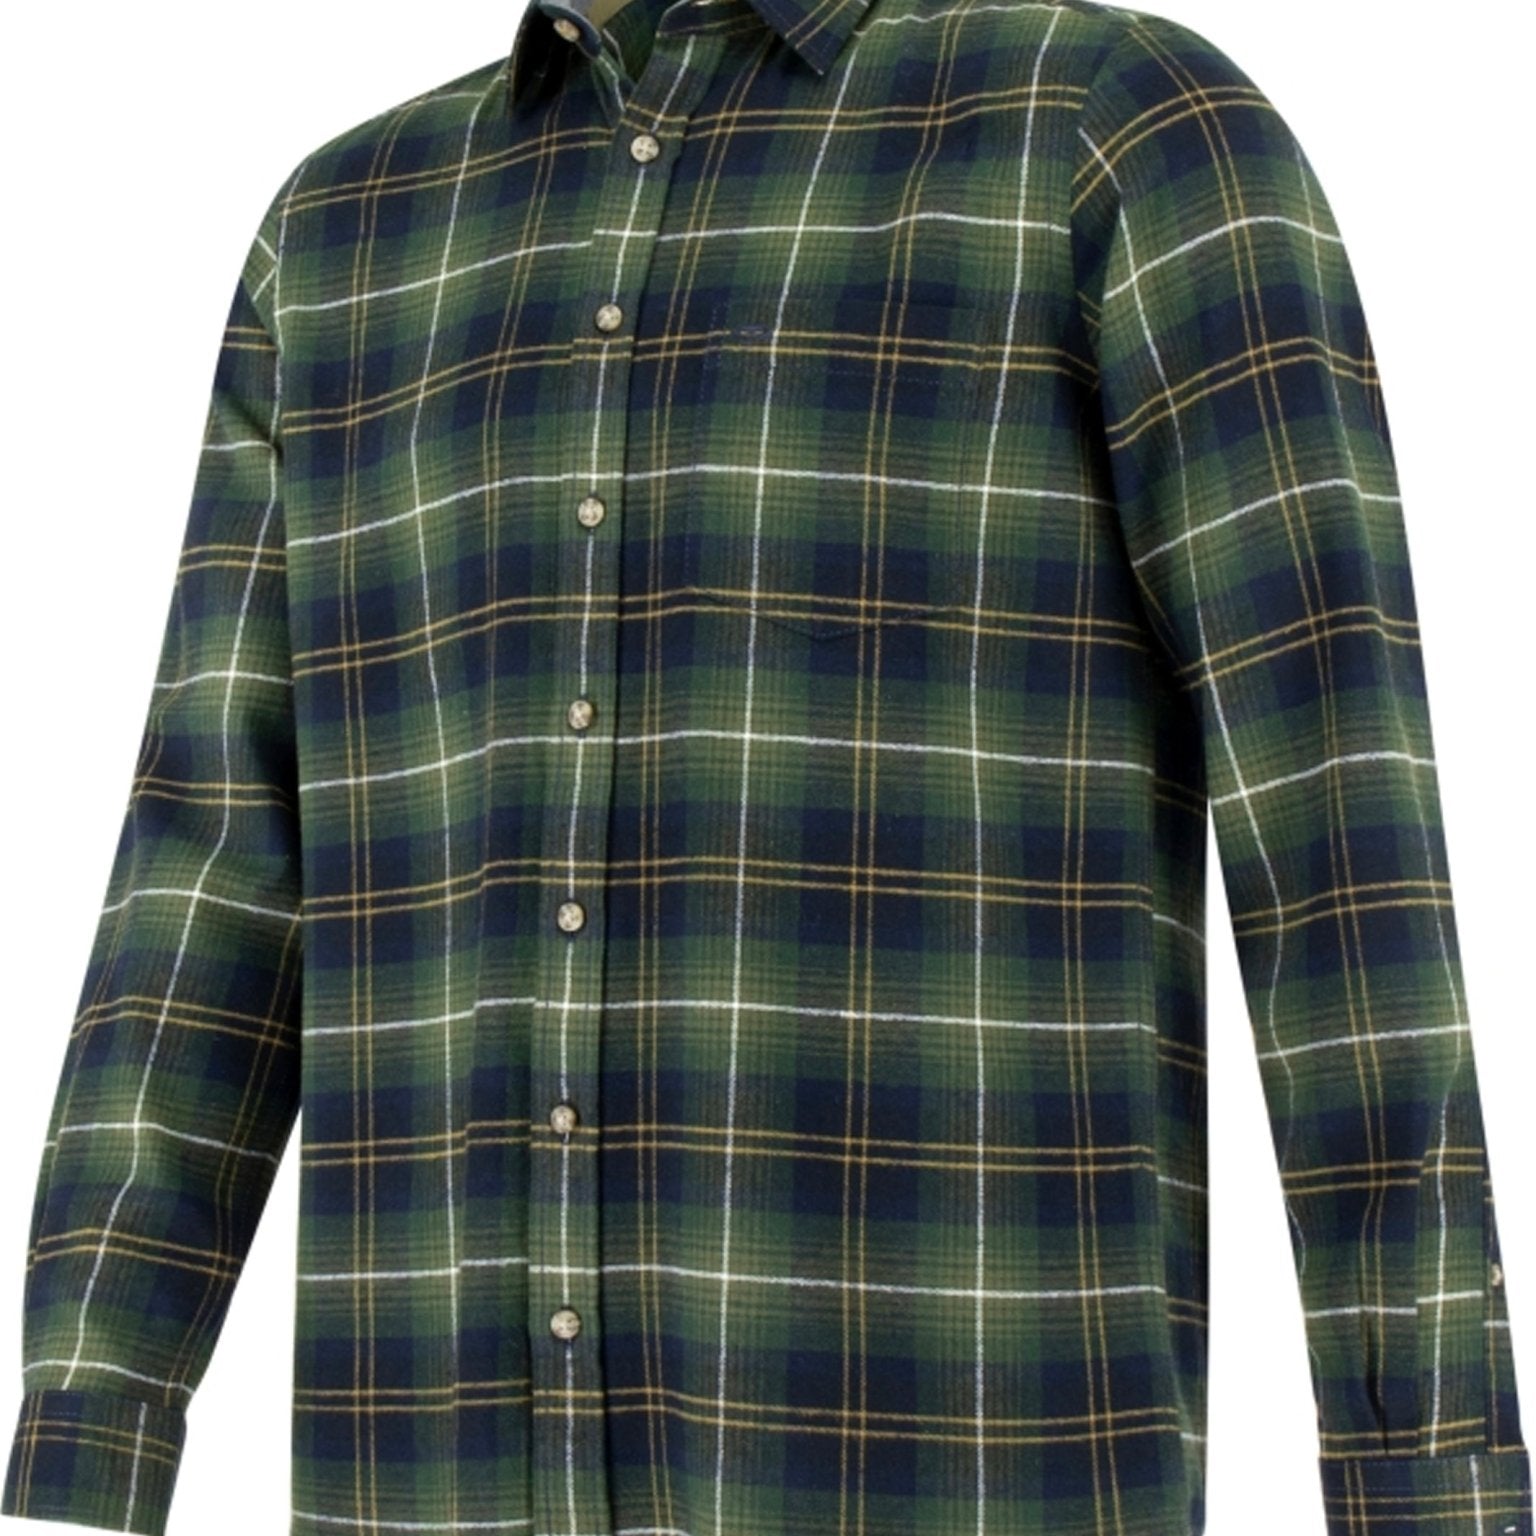 4elementsclothingHoggs of FifeHoggs of Fife - Mens Shirt, Long Sleeve Flannel Check Shirt - Pitmedden Country shirtShirtPITM/GR/1